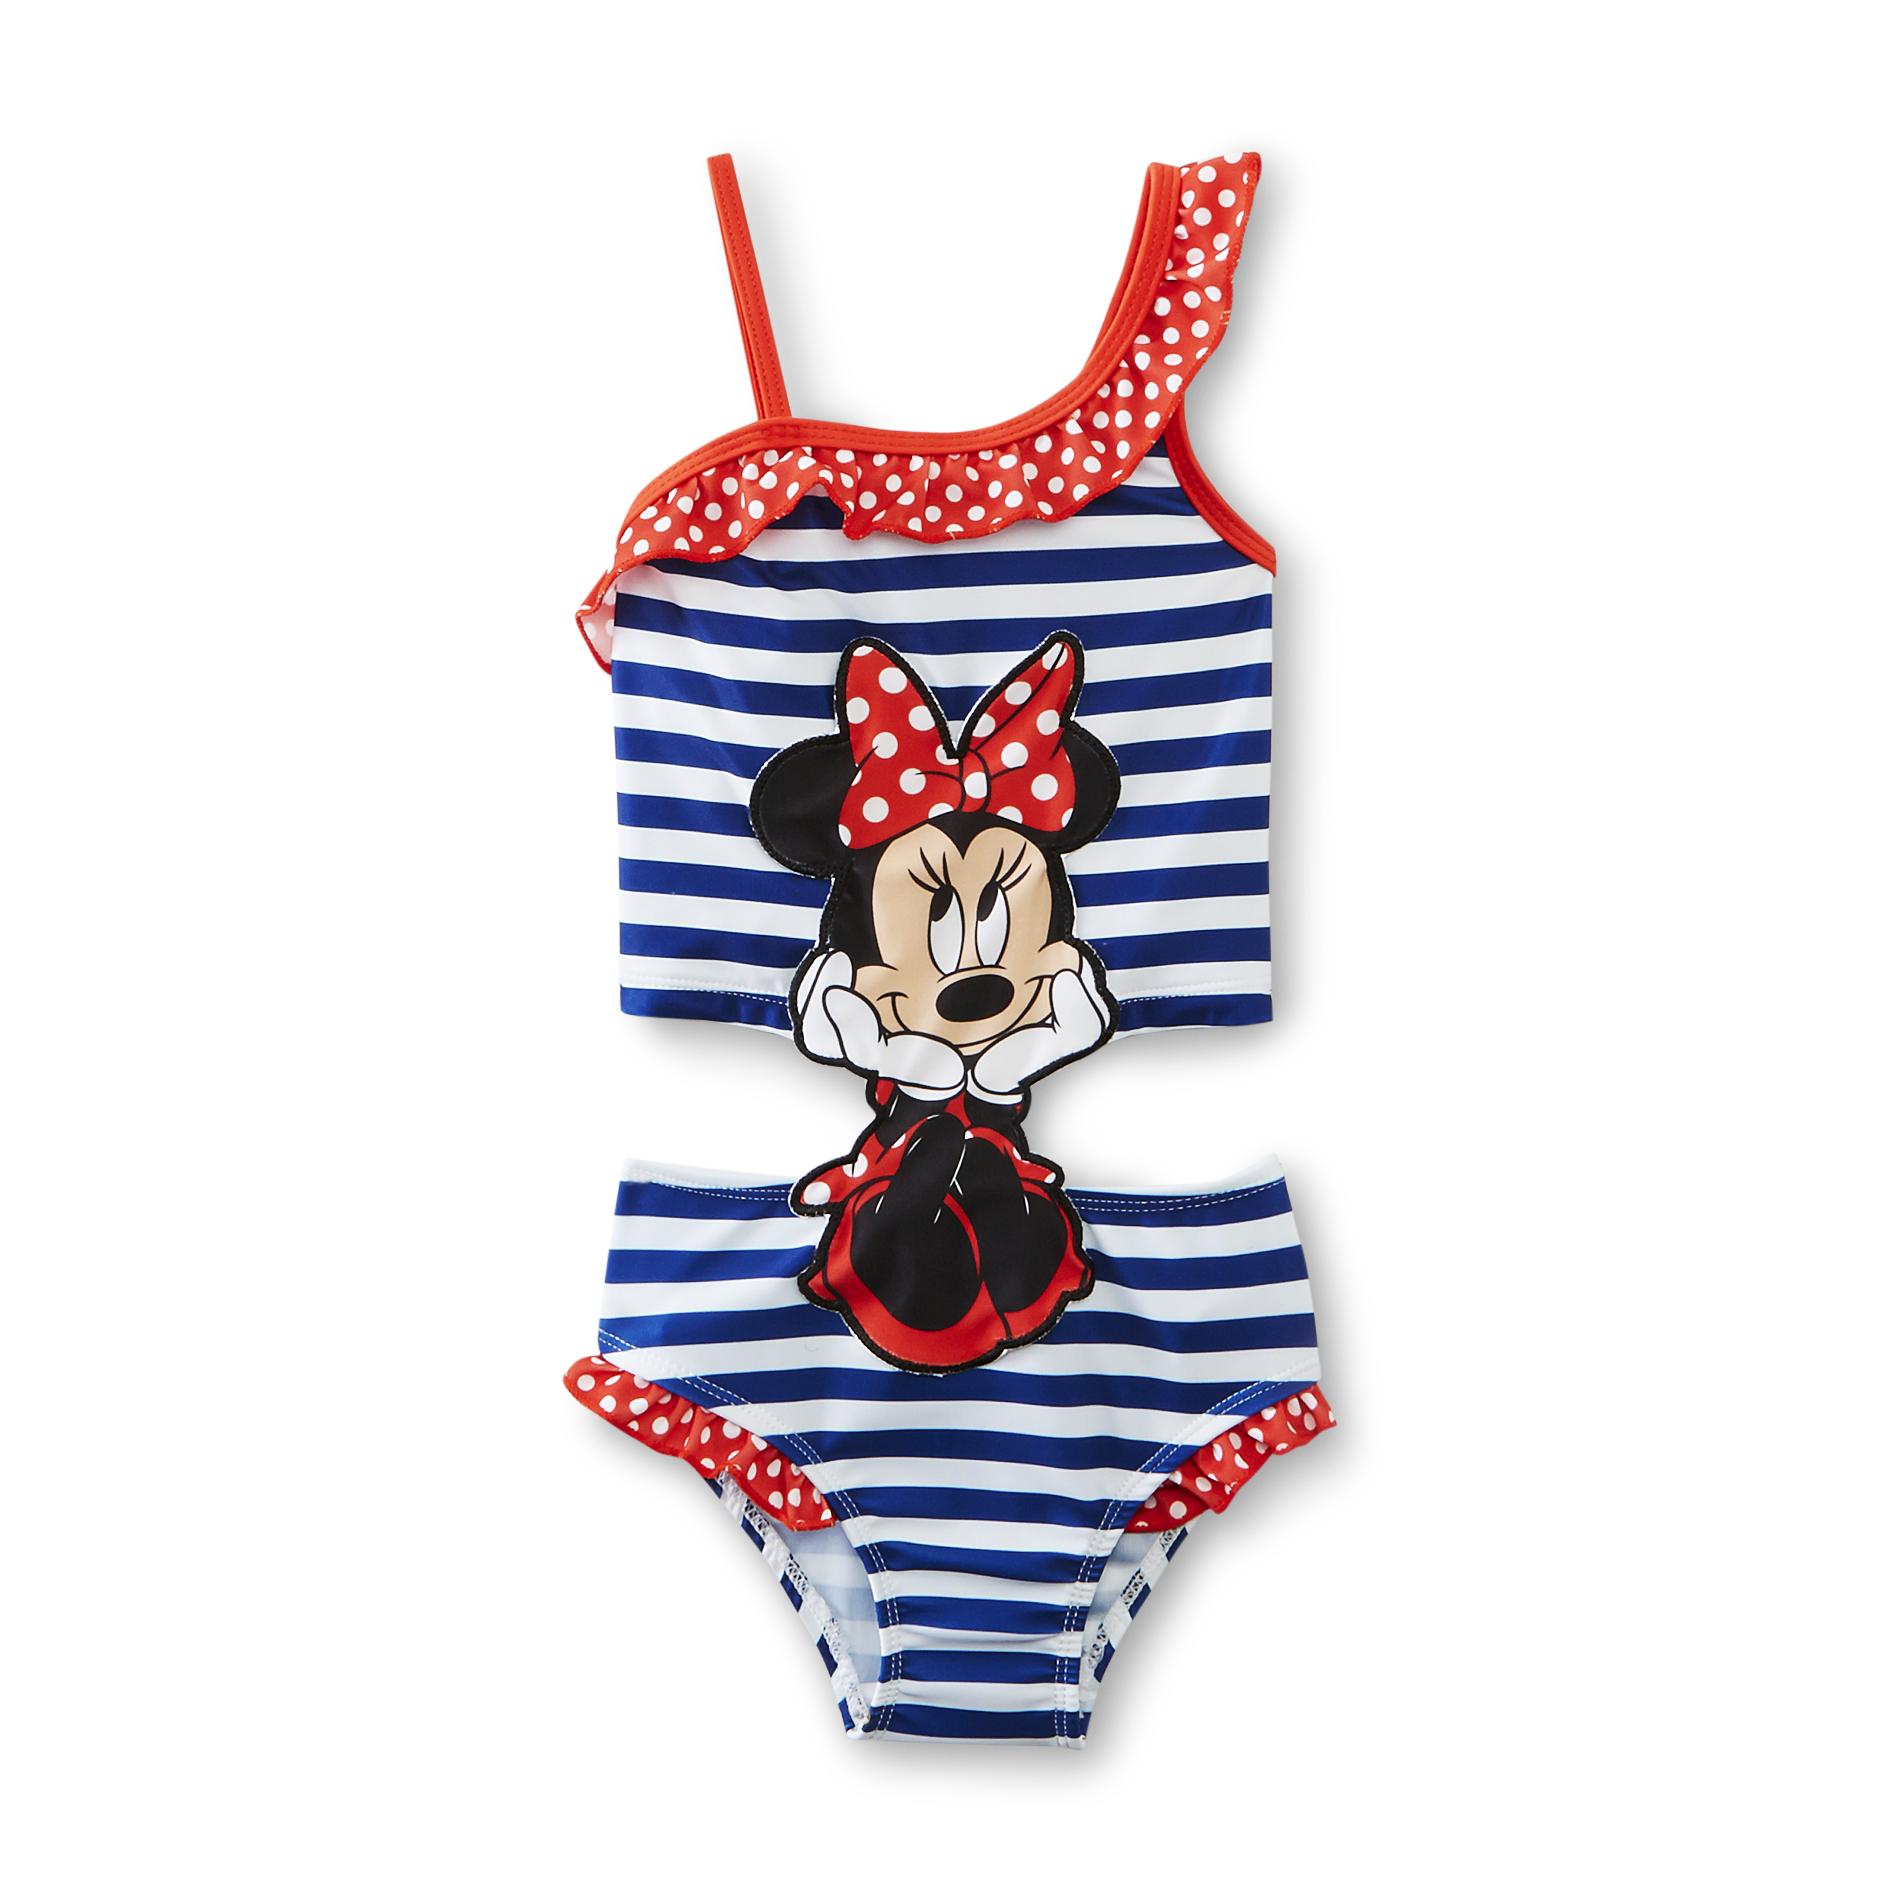 Disney Minnie Mouse Infant & Toddler Girl's Monokini Swimsuit - Striped